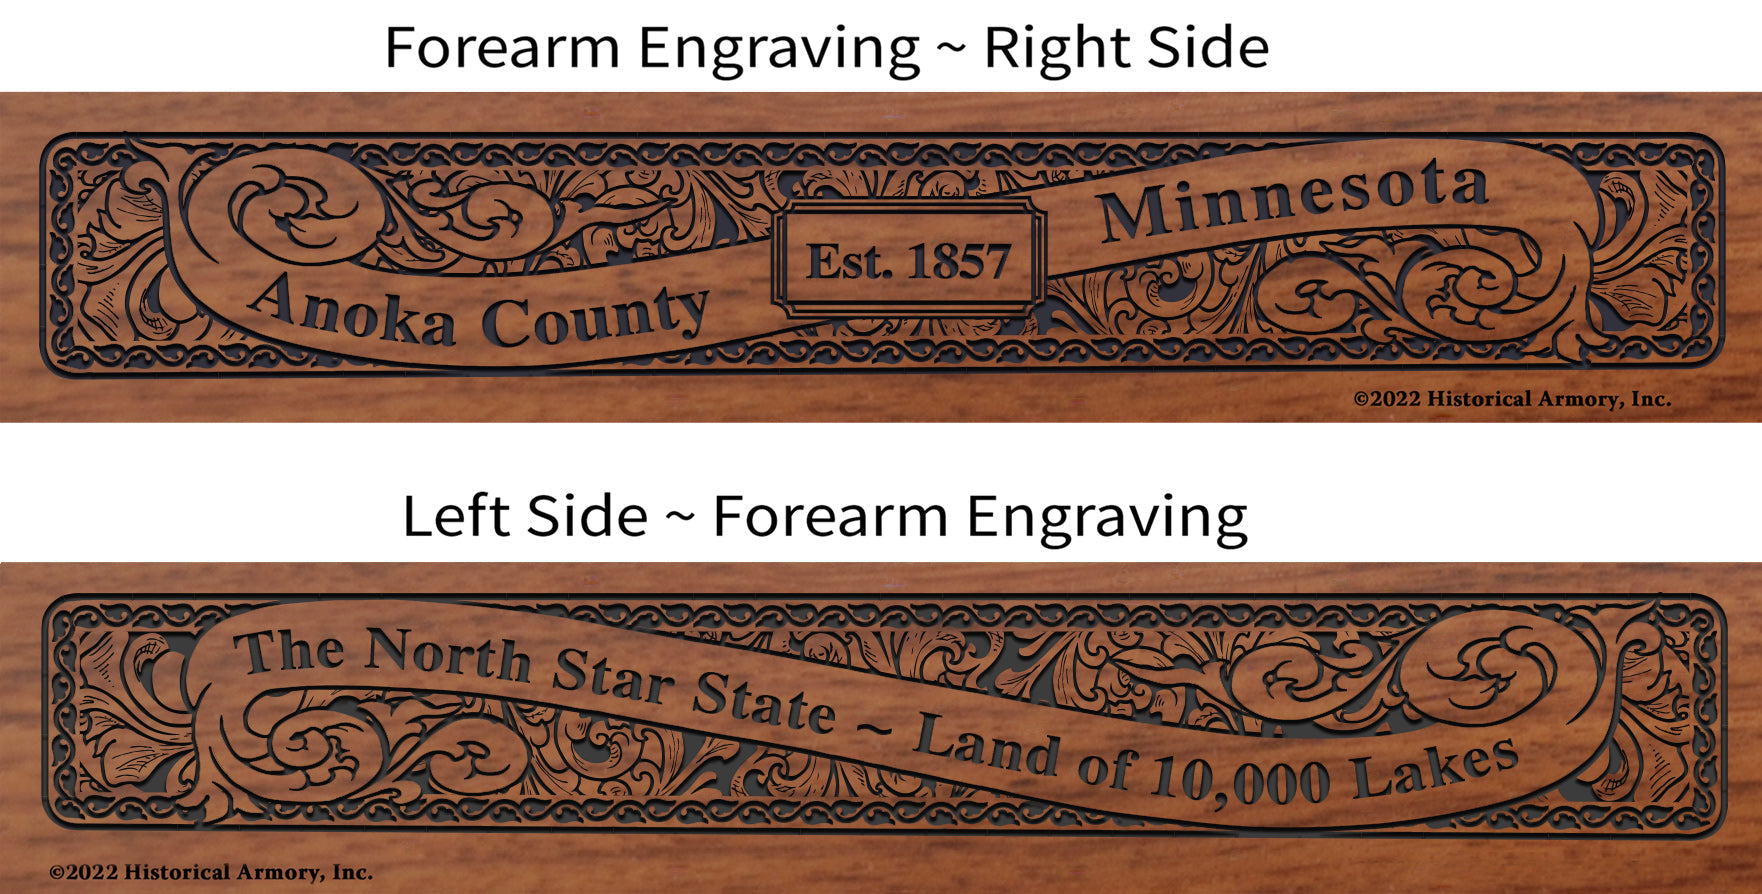 Anoka County Minnesota Engraved Rifle Forearm